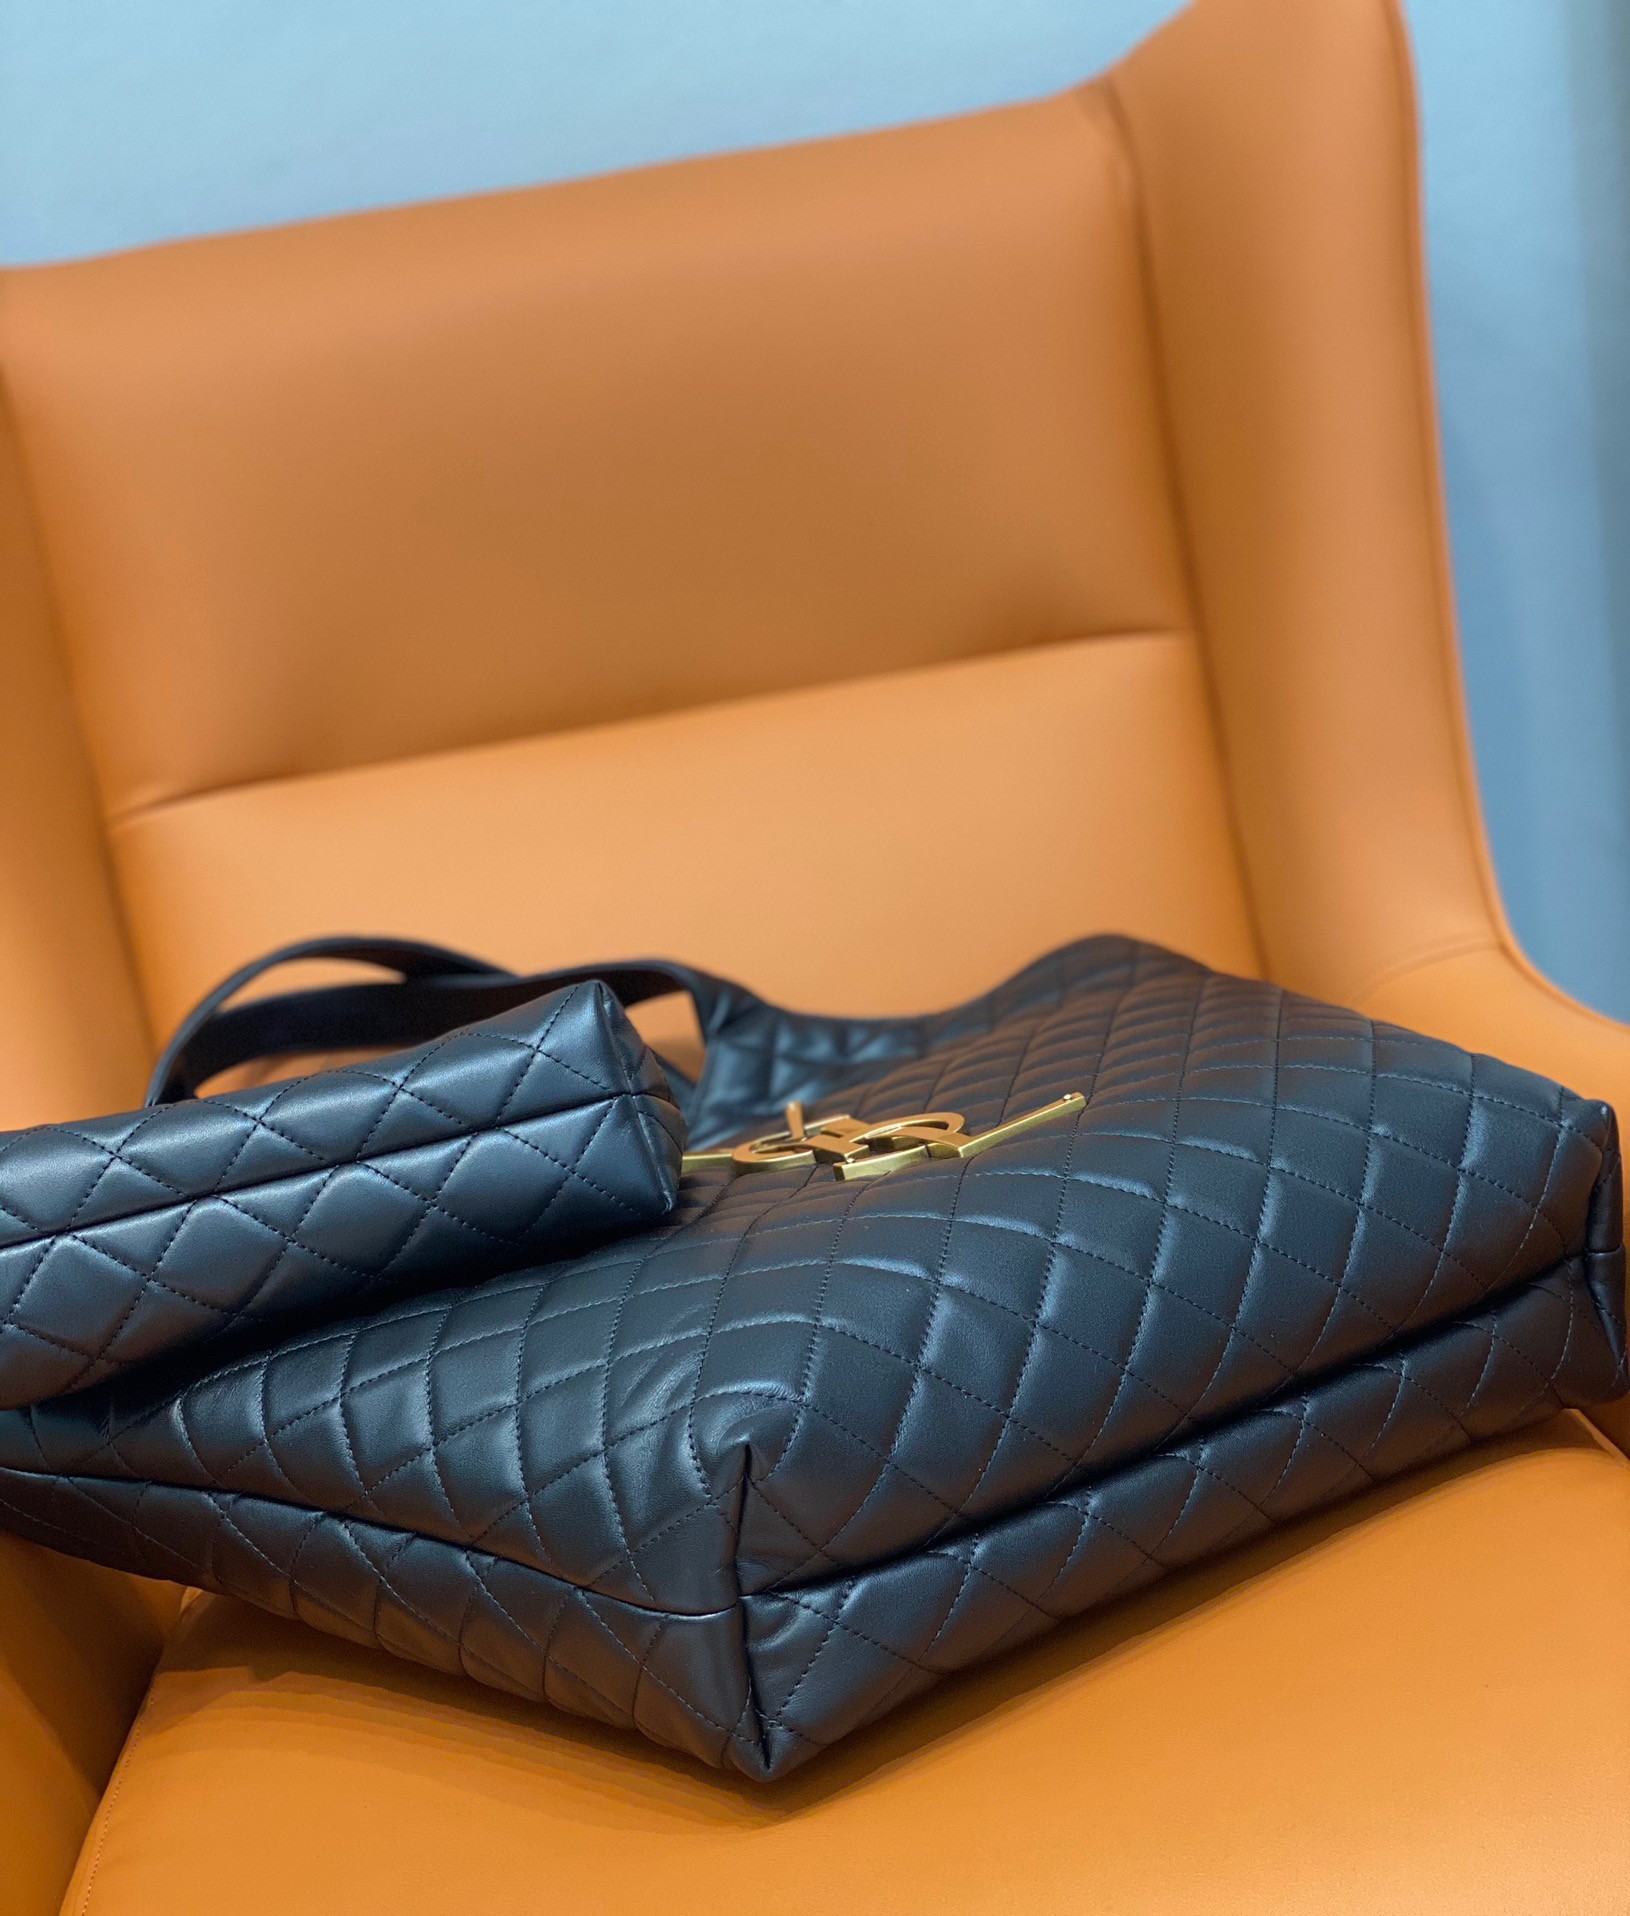 YSL ICARE MAXI SHOPPING BAG DENIM replica - Affordable Luxury Bags